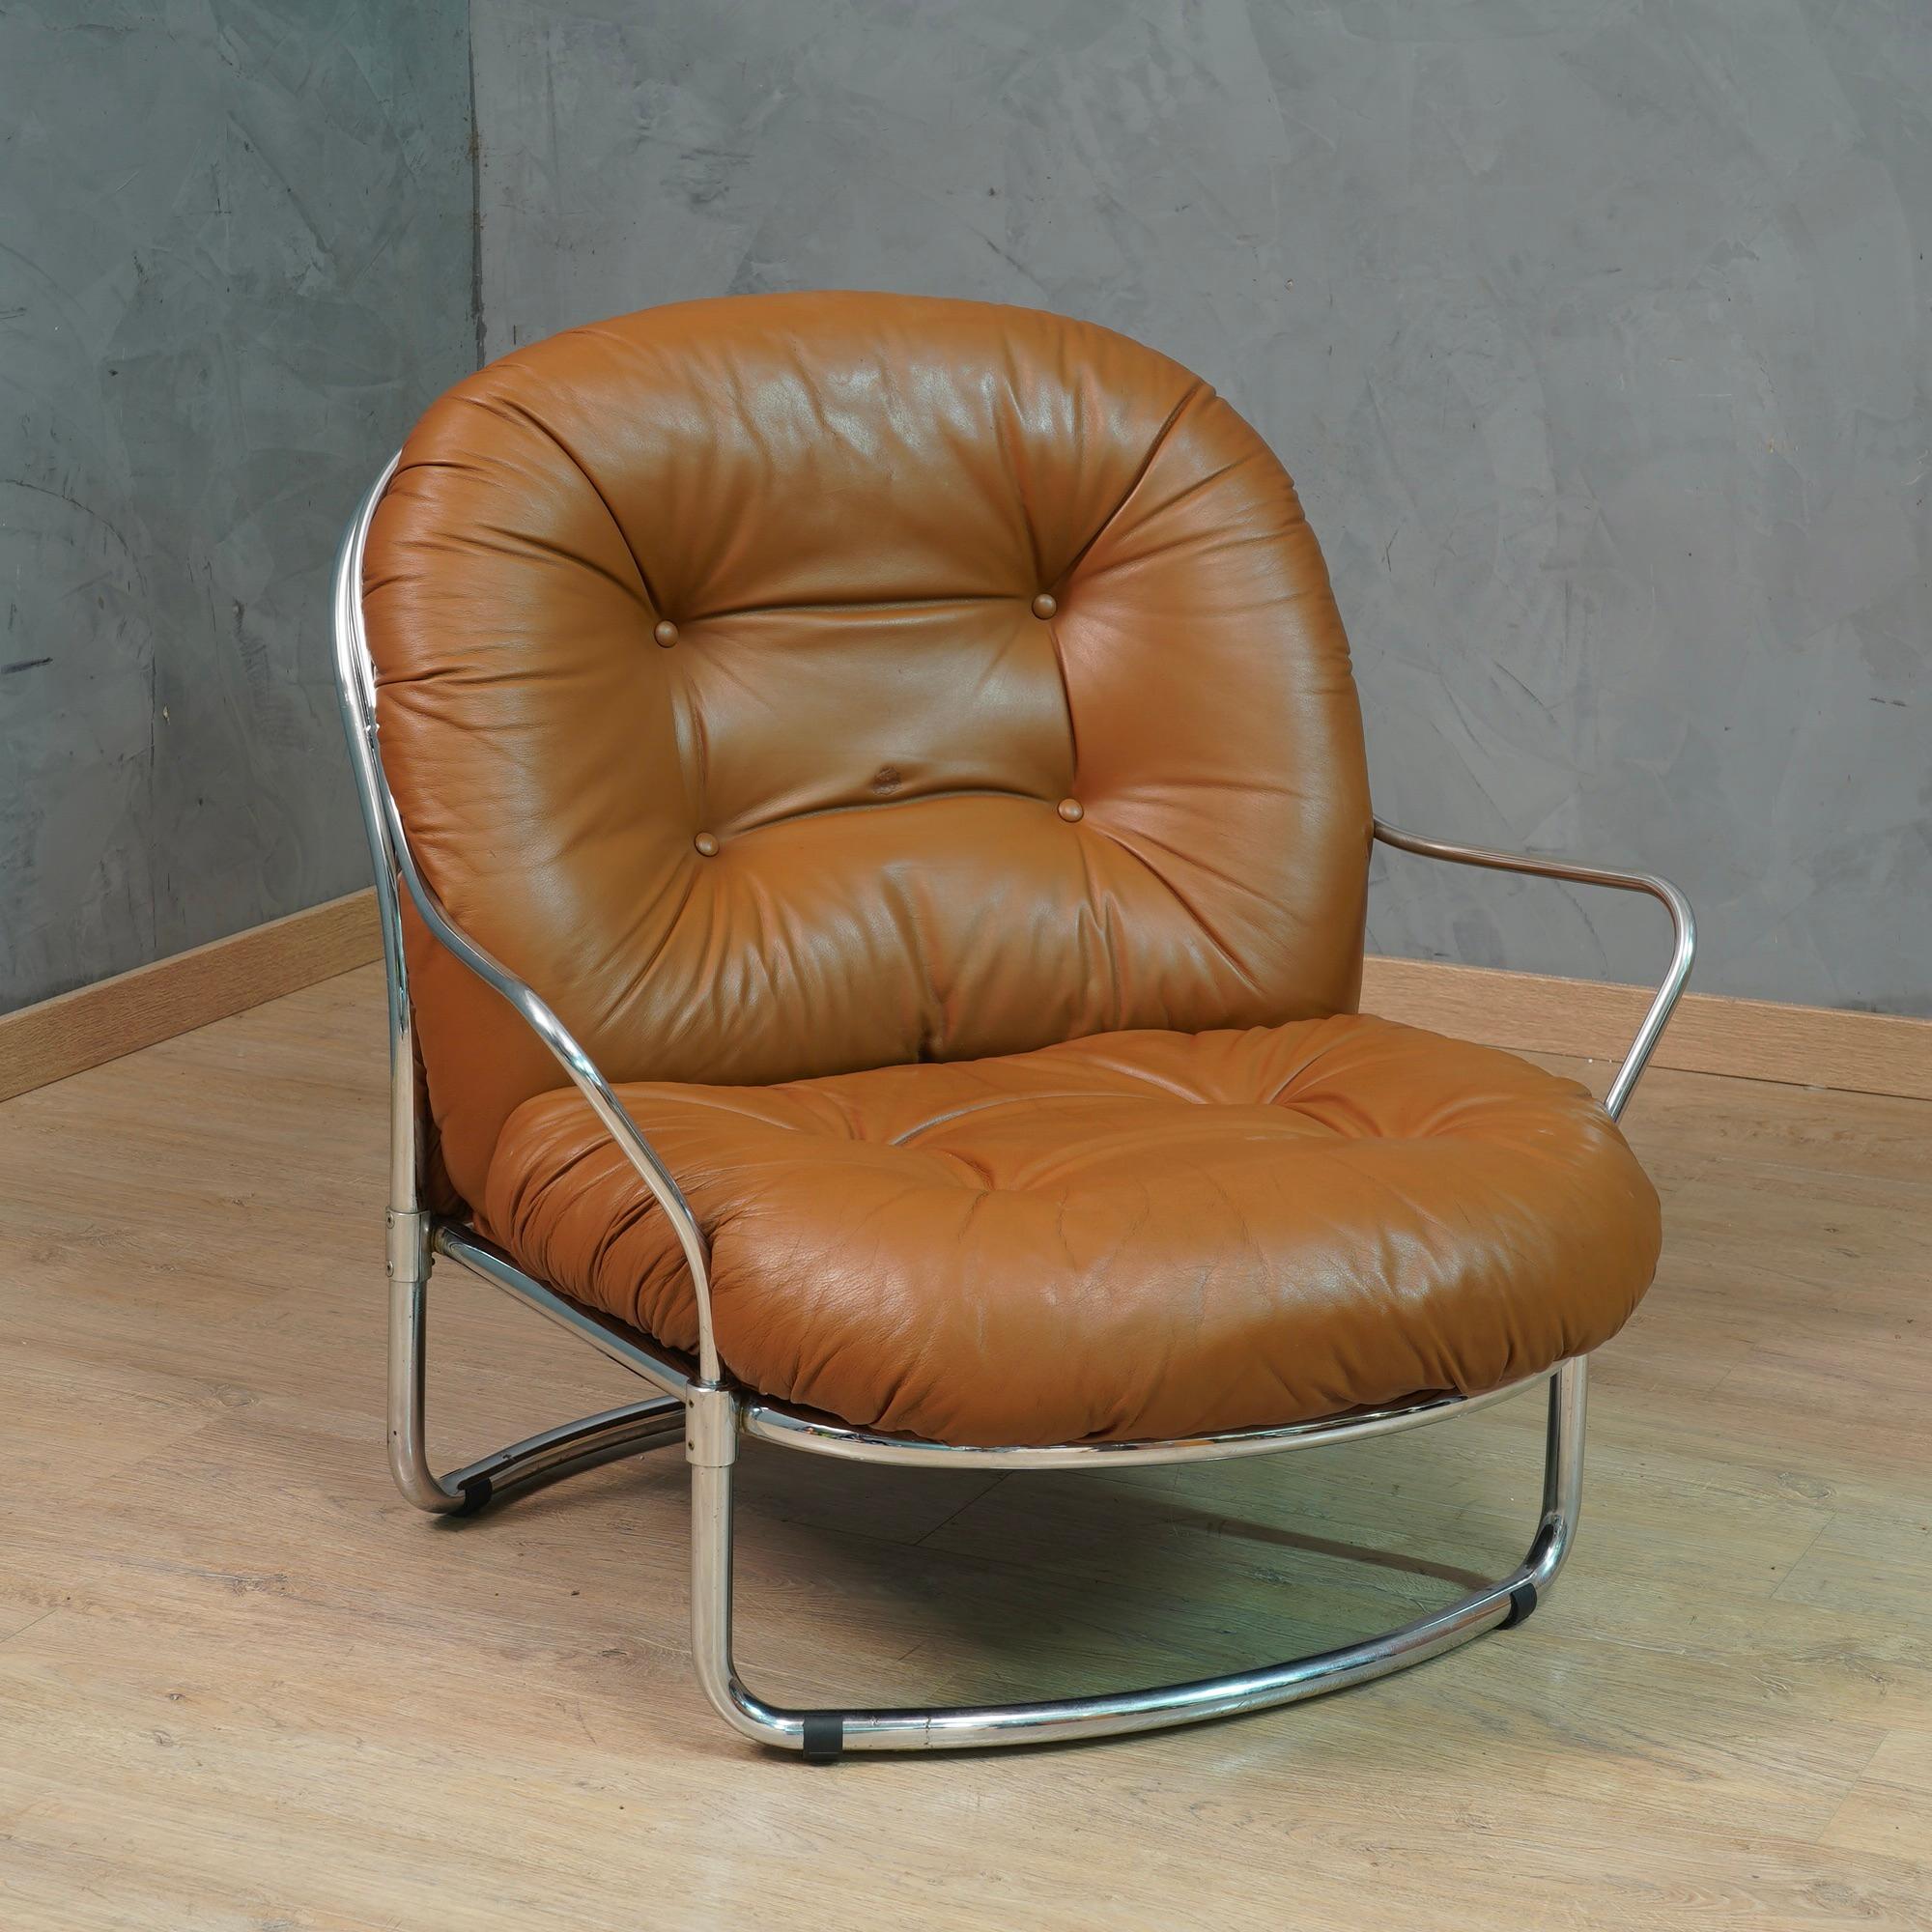 Carlo De Carli for Cinova Mod. 915 Chrome and Brown Leather Arm Chair, 1969 For Sale 2